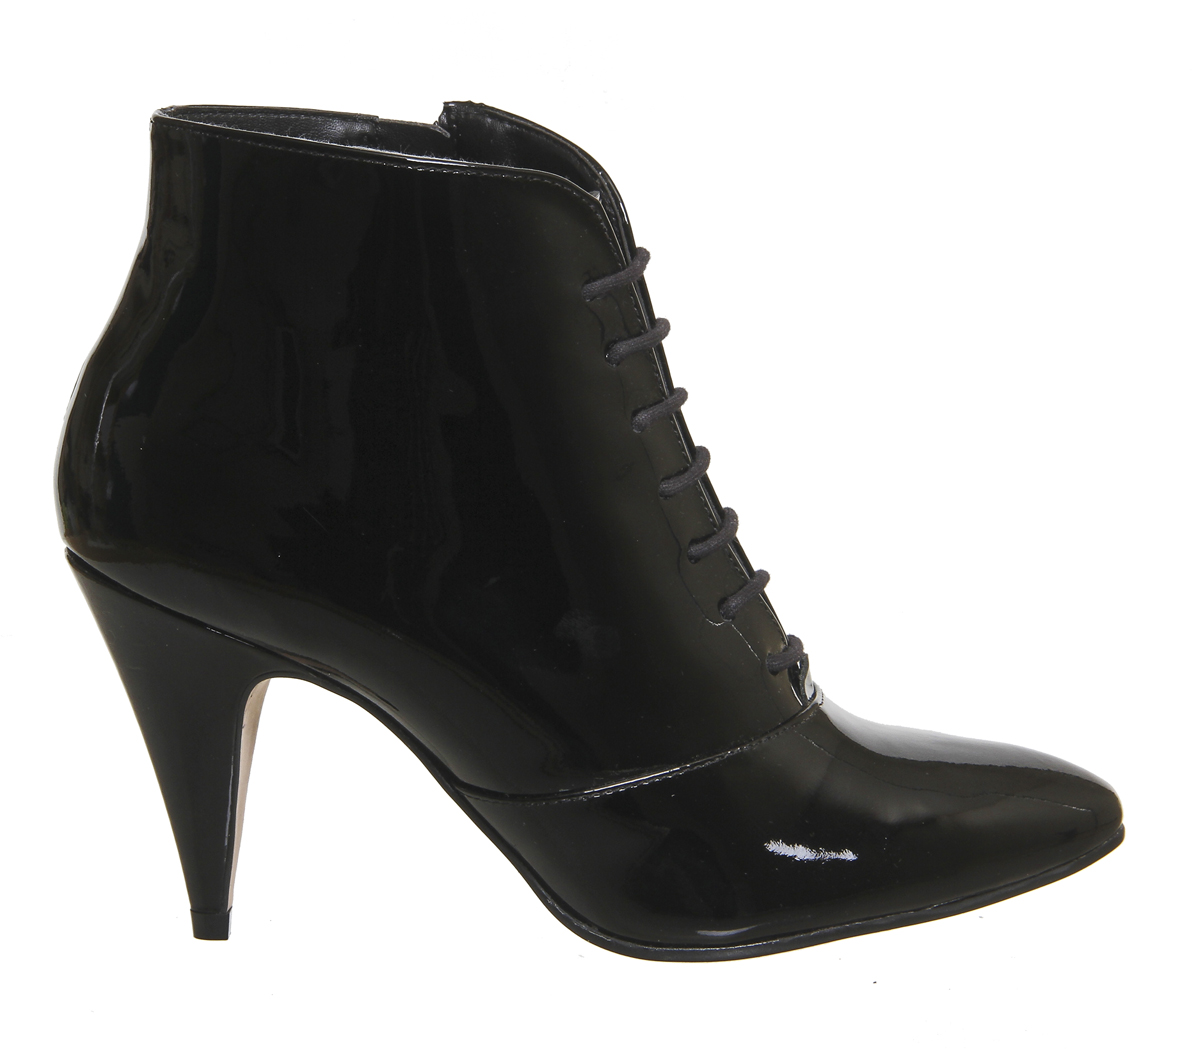 OFFICE Lauper Lace Up Boots Black Patent - Women's Ankle Boots